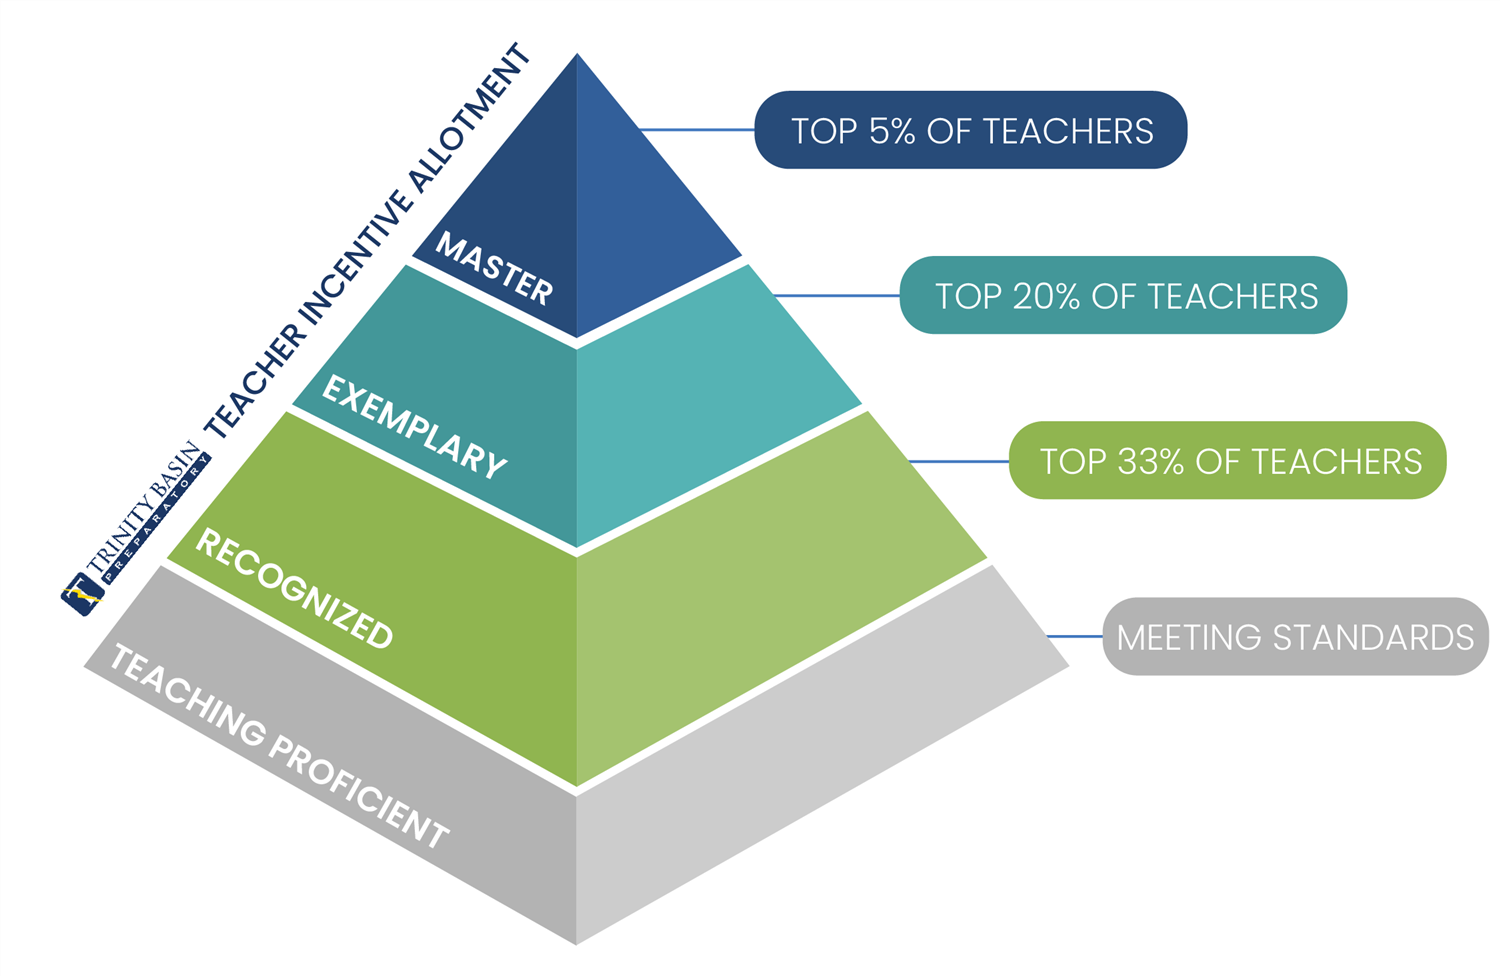 Tiers: Top 5% Teachers=Master, Top 20% Teachers=Exemplary, Top 33% Teachers=Recognized, Meeting Standards=Teaching Proficient